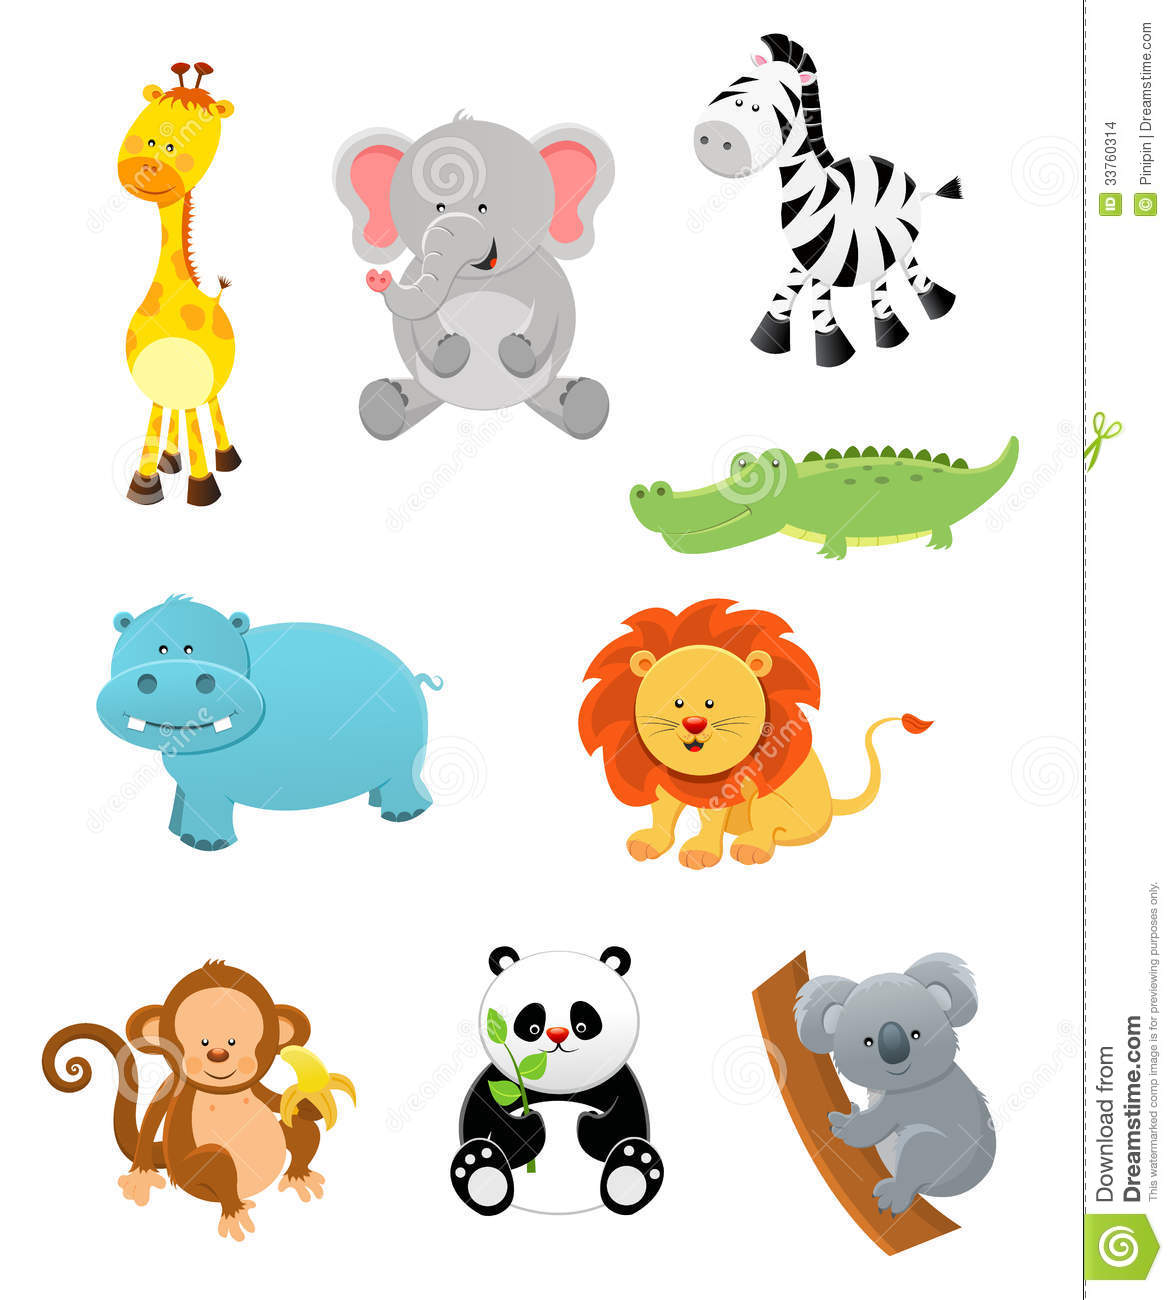 Cartoon Animals    338 X 450 62 5kb Zoo Animals    1500 X 1500 251 3kb